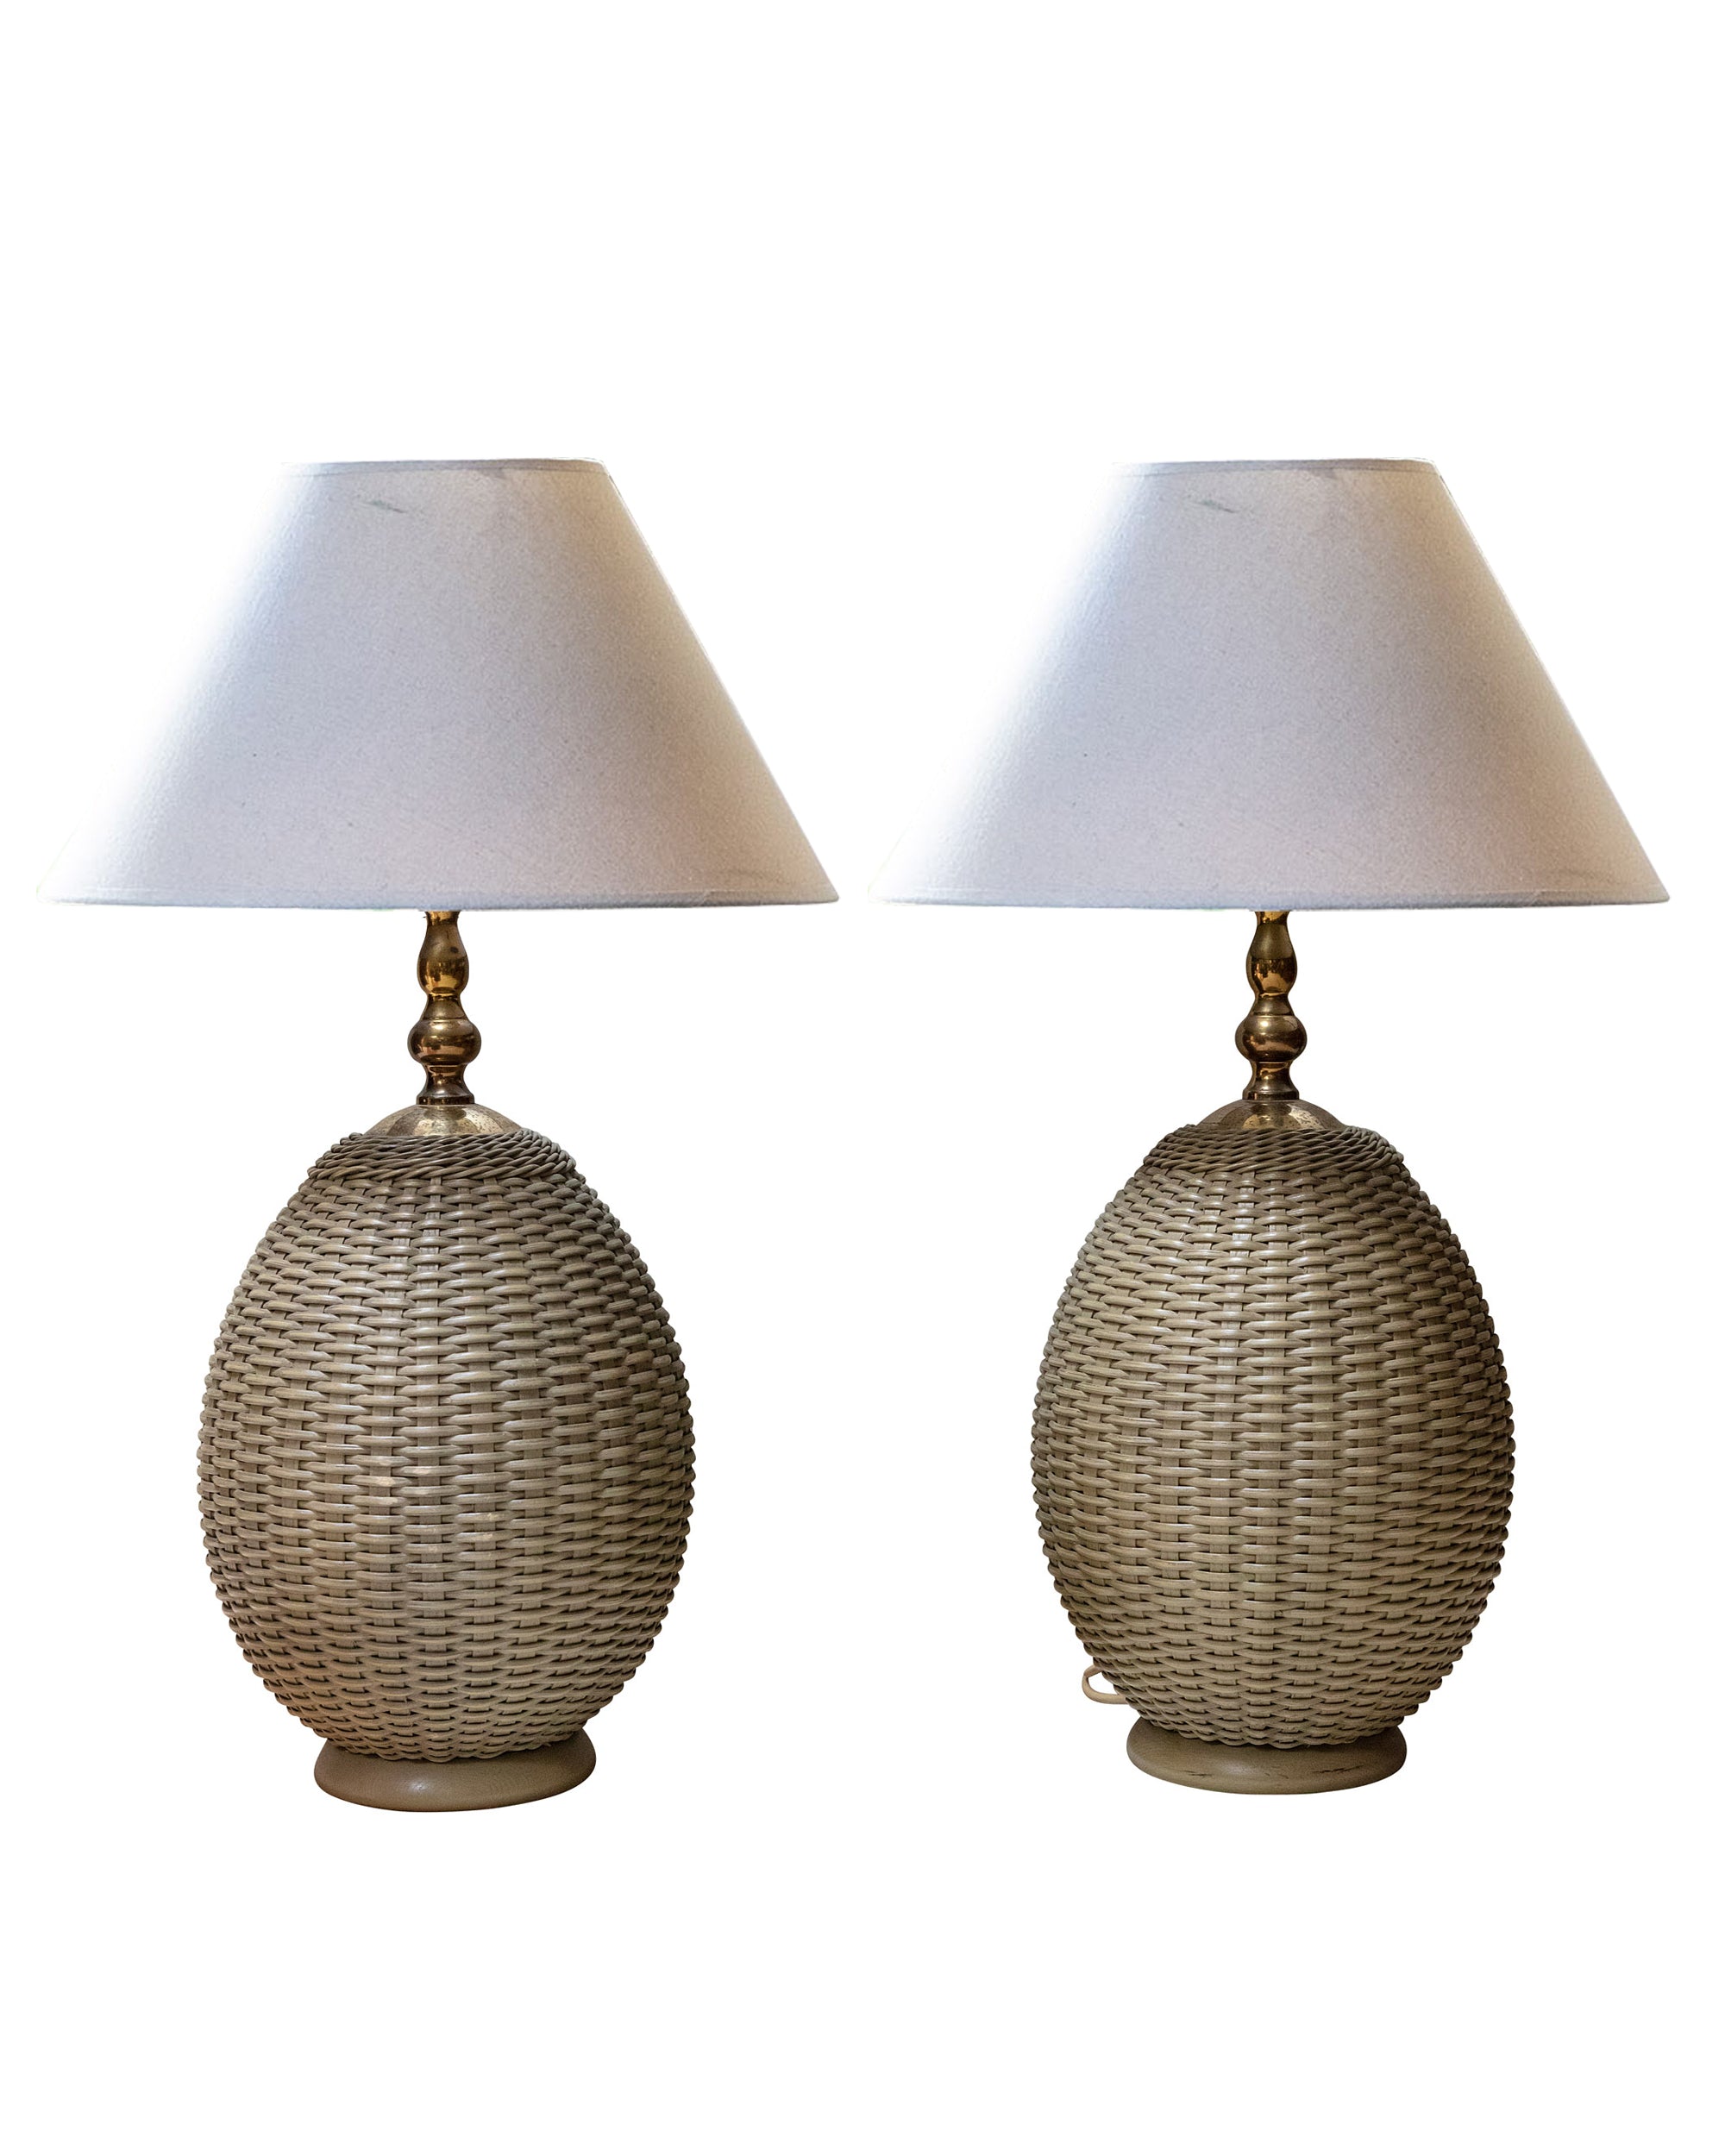 Pair of gray wicker lamps